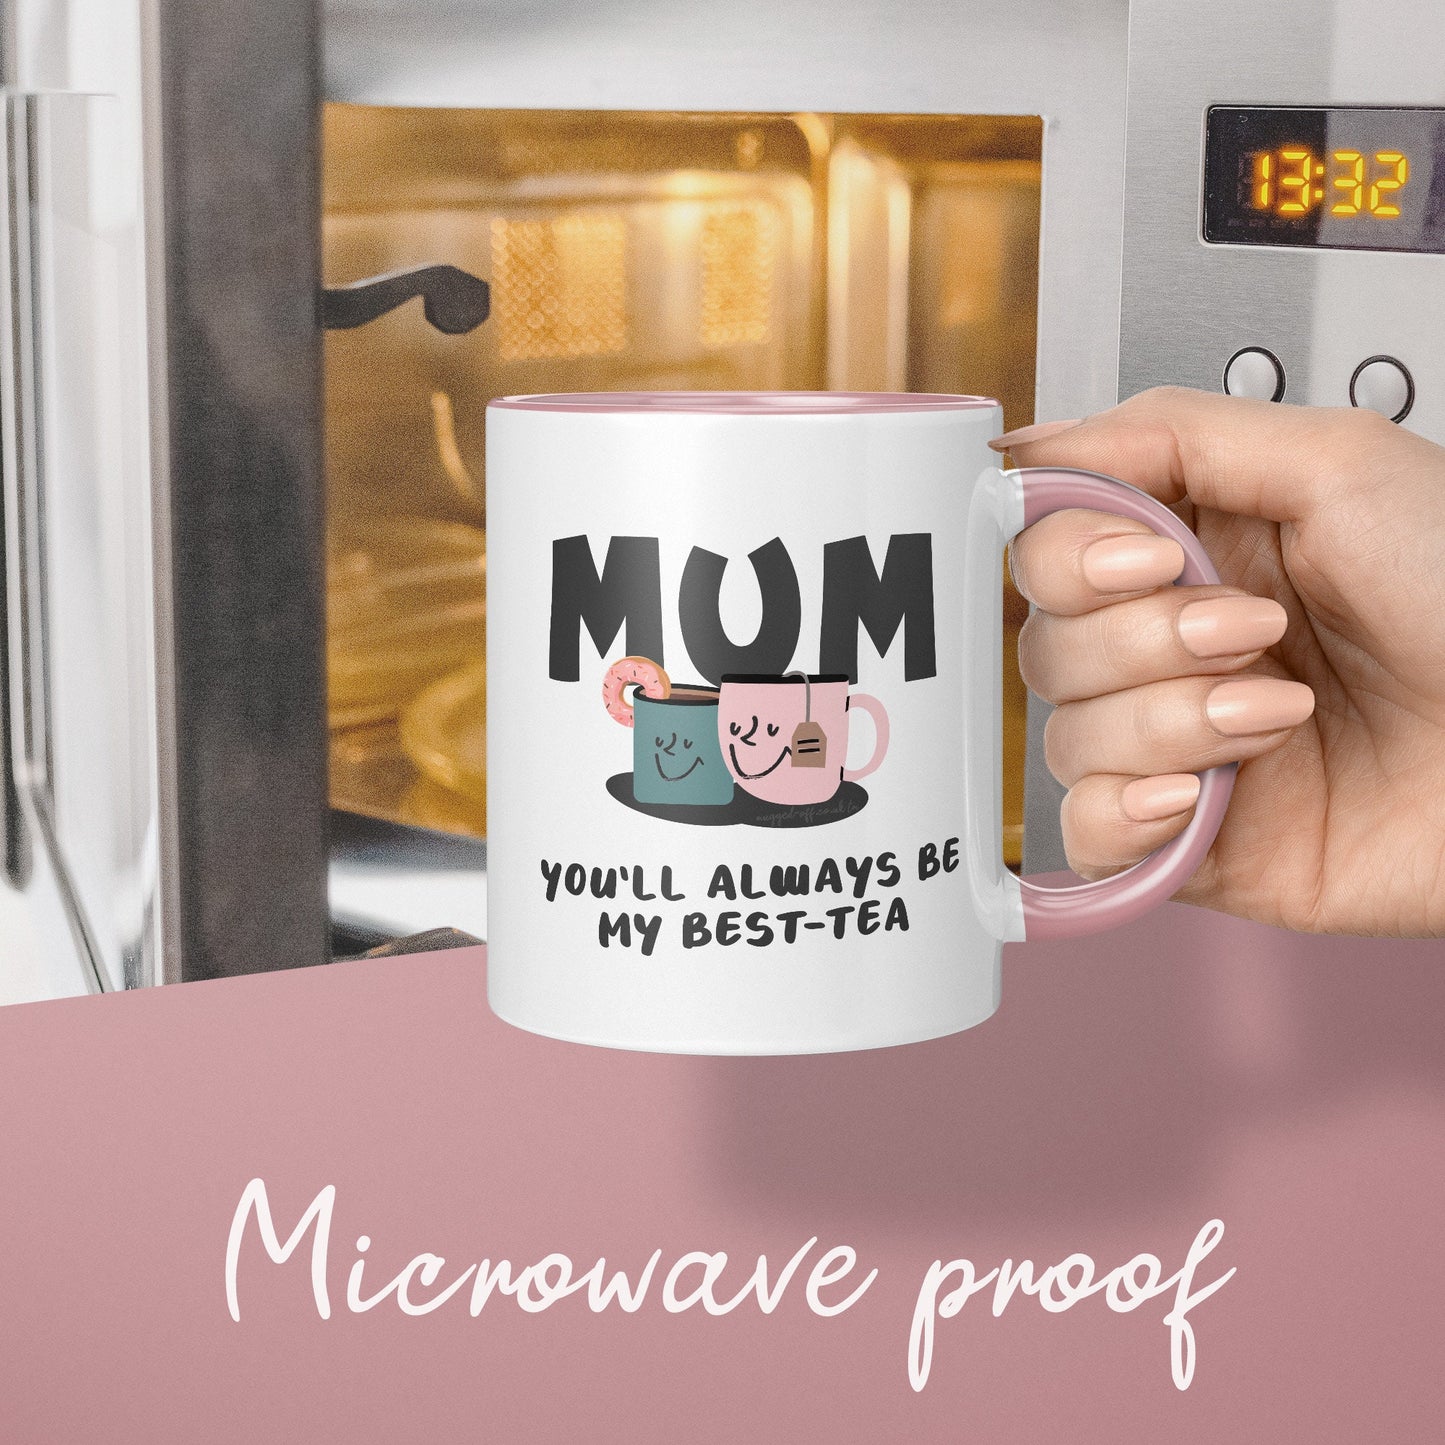 Mum Mug, Funny Mum Birthday Mug, From Son, Daughter, Funny Best Mother Mug, Mummy You'll Always Be My Best-tea Mug